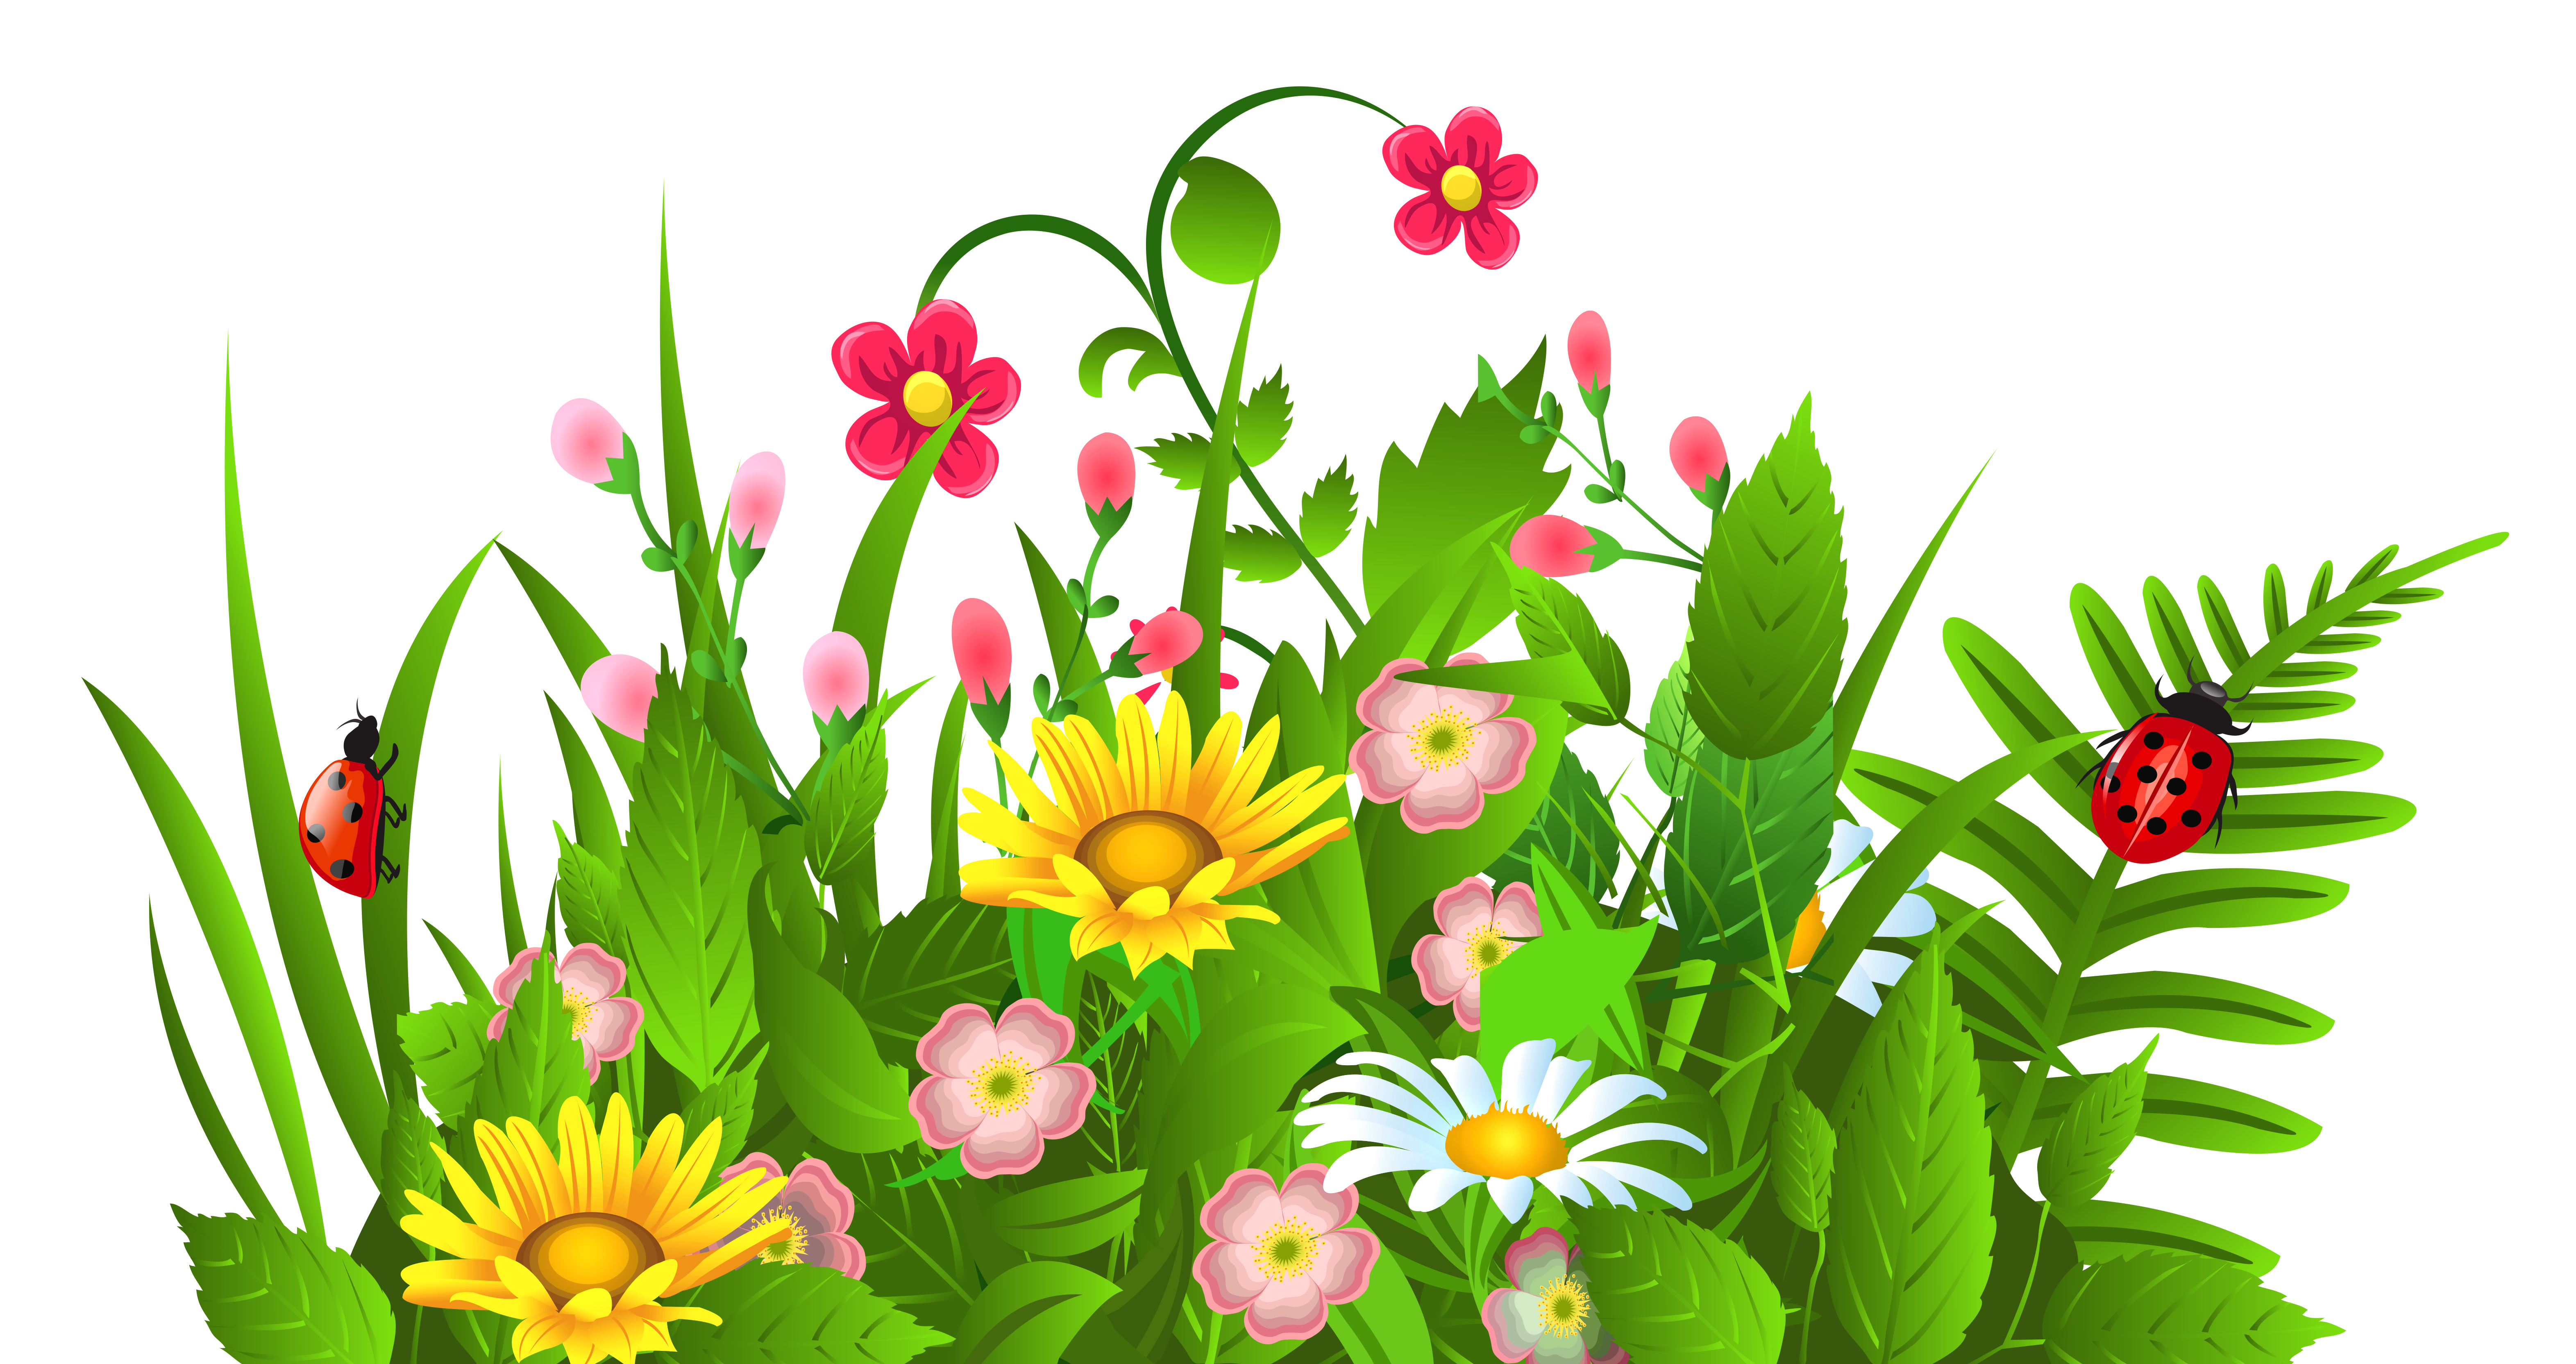 Free clipart images of flowers flower clip art pictures image 1 - Clipartix